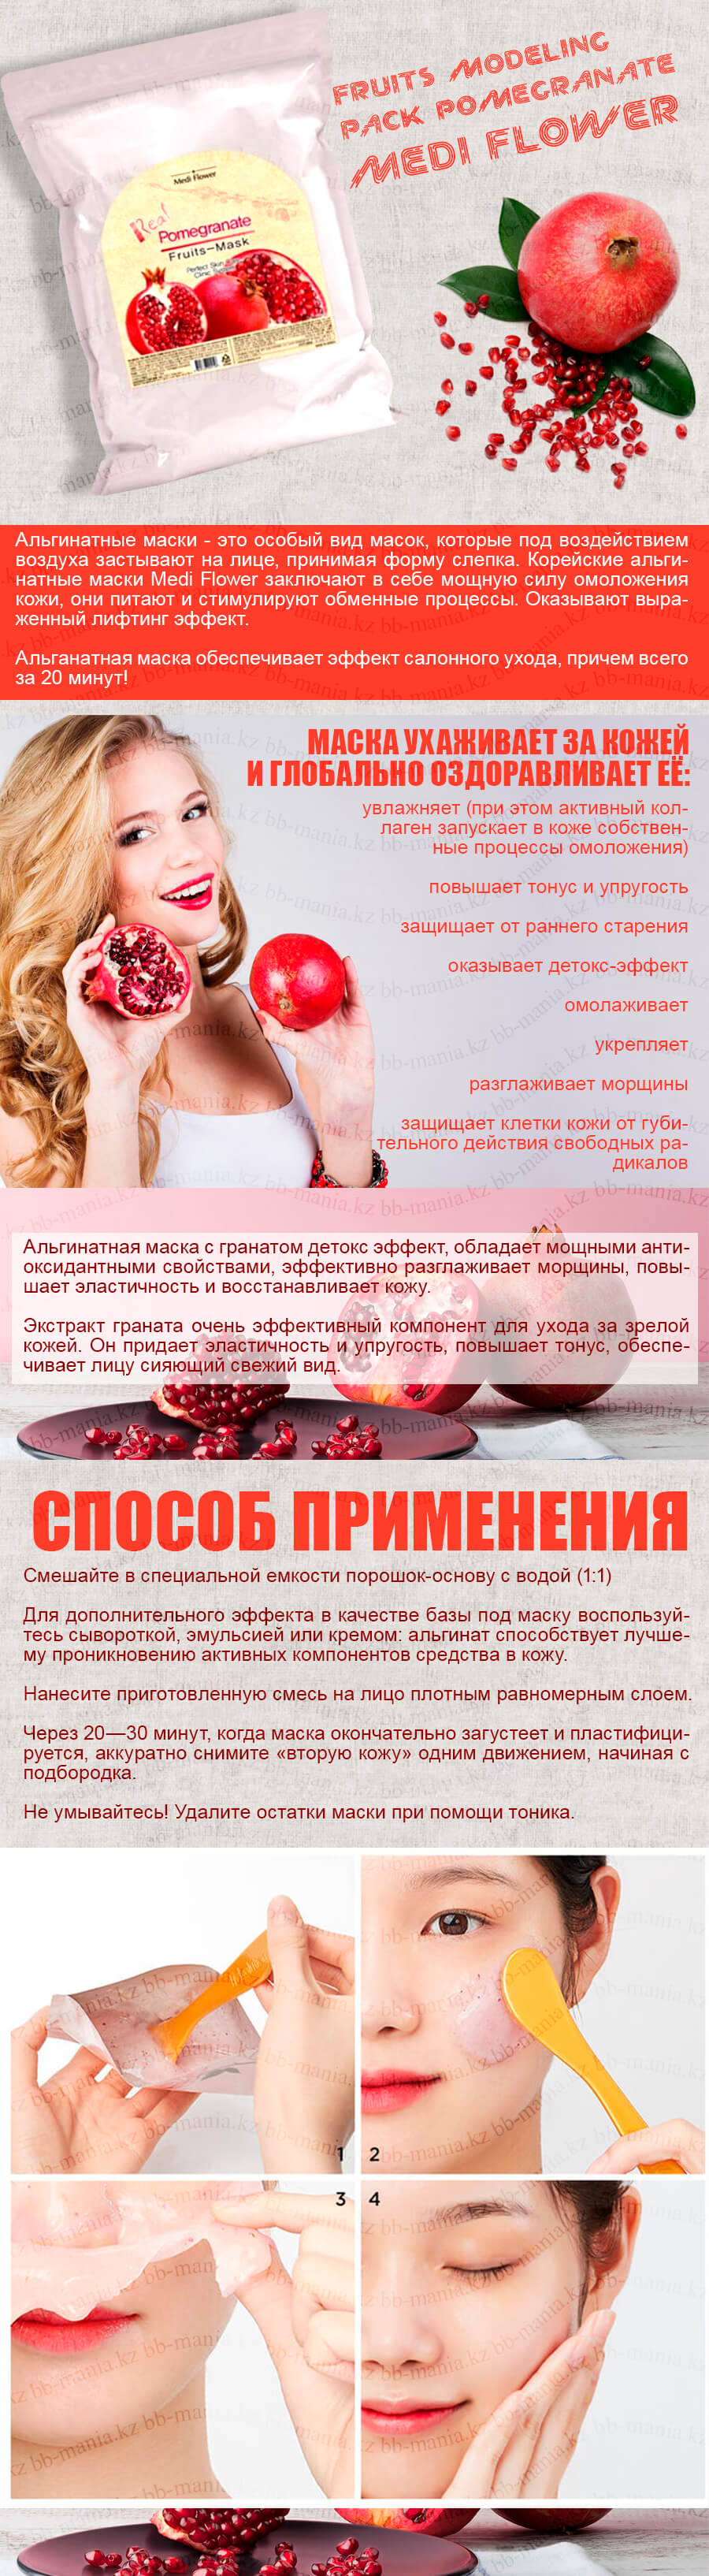 Fruits Modeling Pack Pomegranate [Medi Flower] (1)